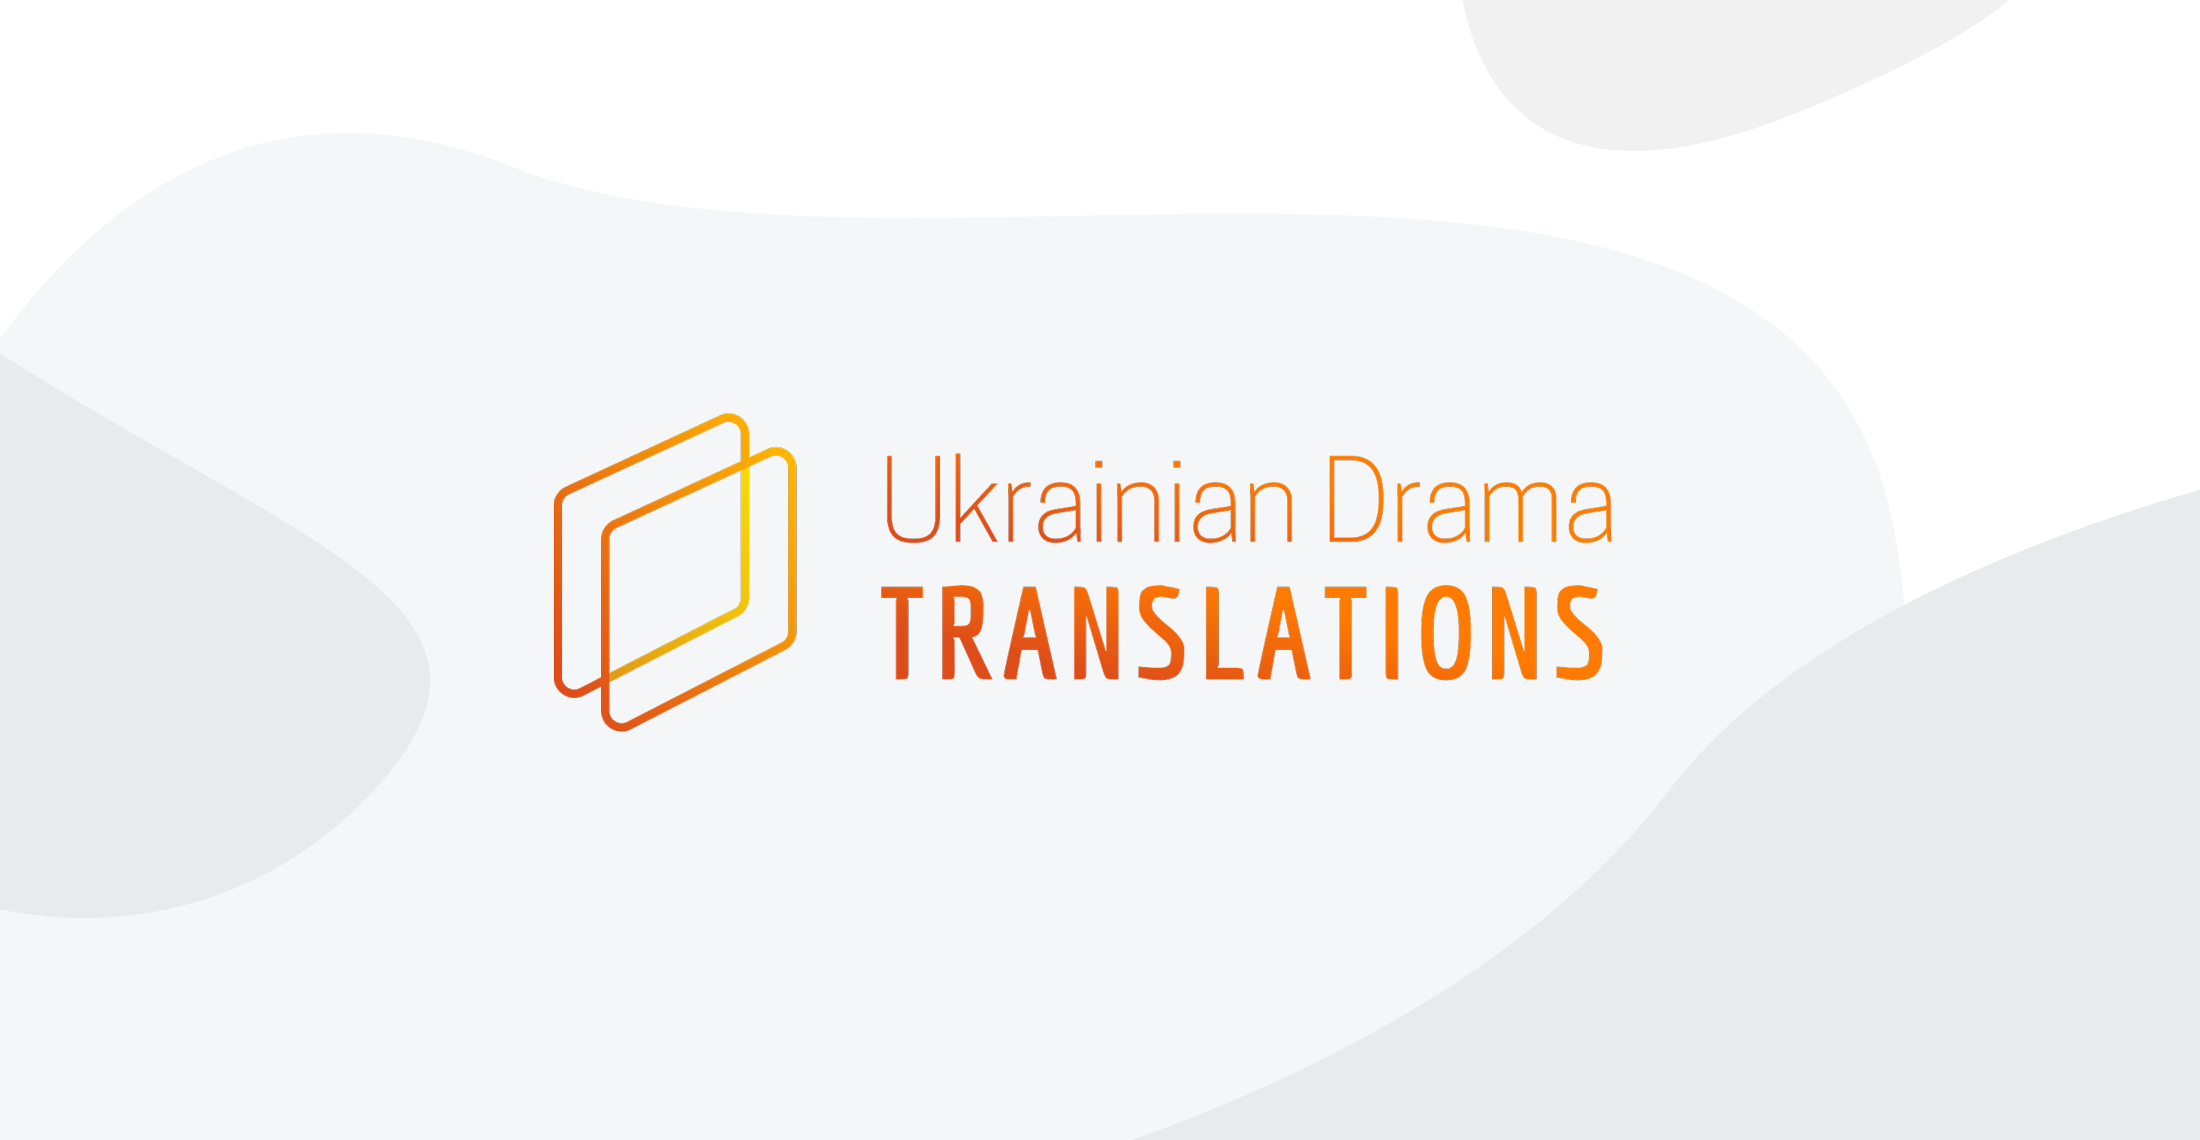 krainian Drama Translations